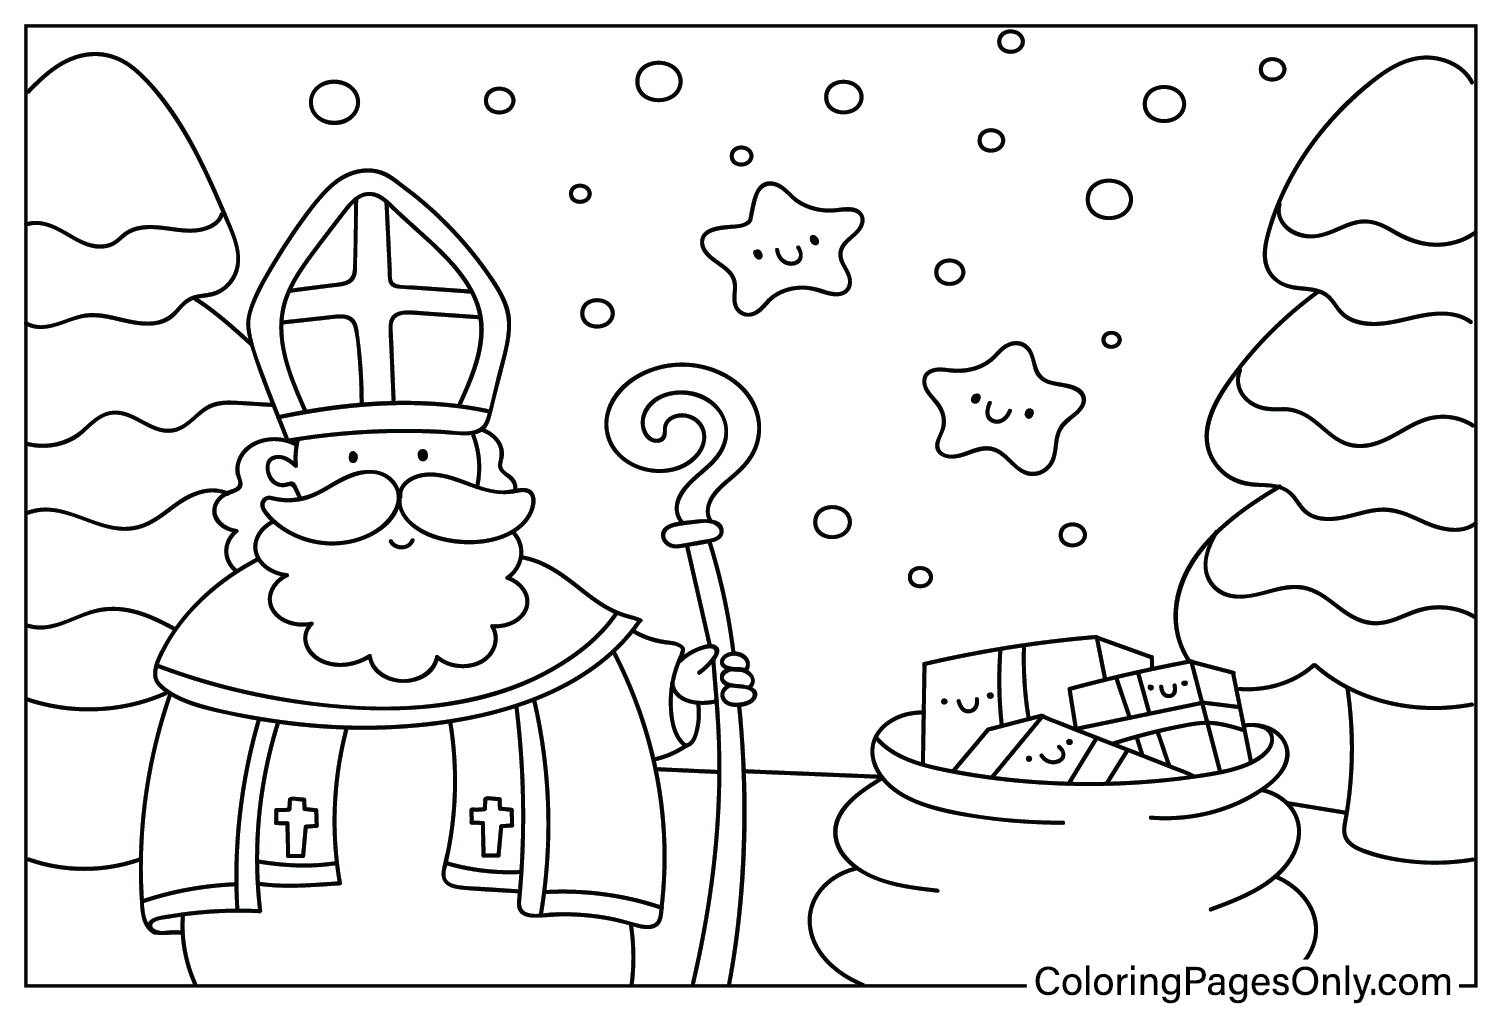 Printable Saint Nicholas Day Coloring Page from Saint Nicholas Day